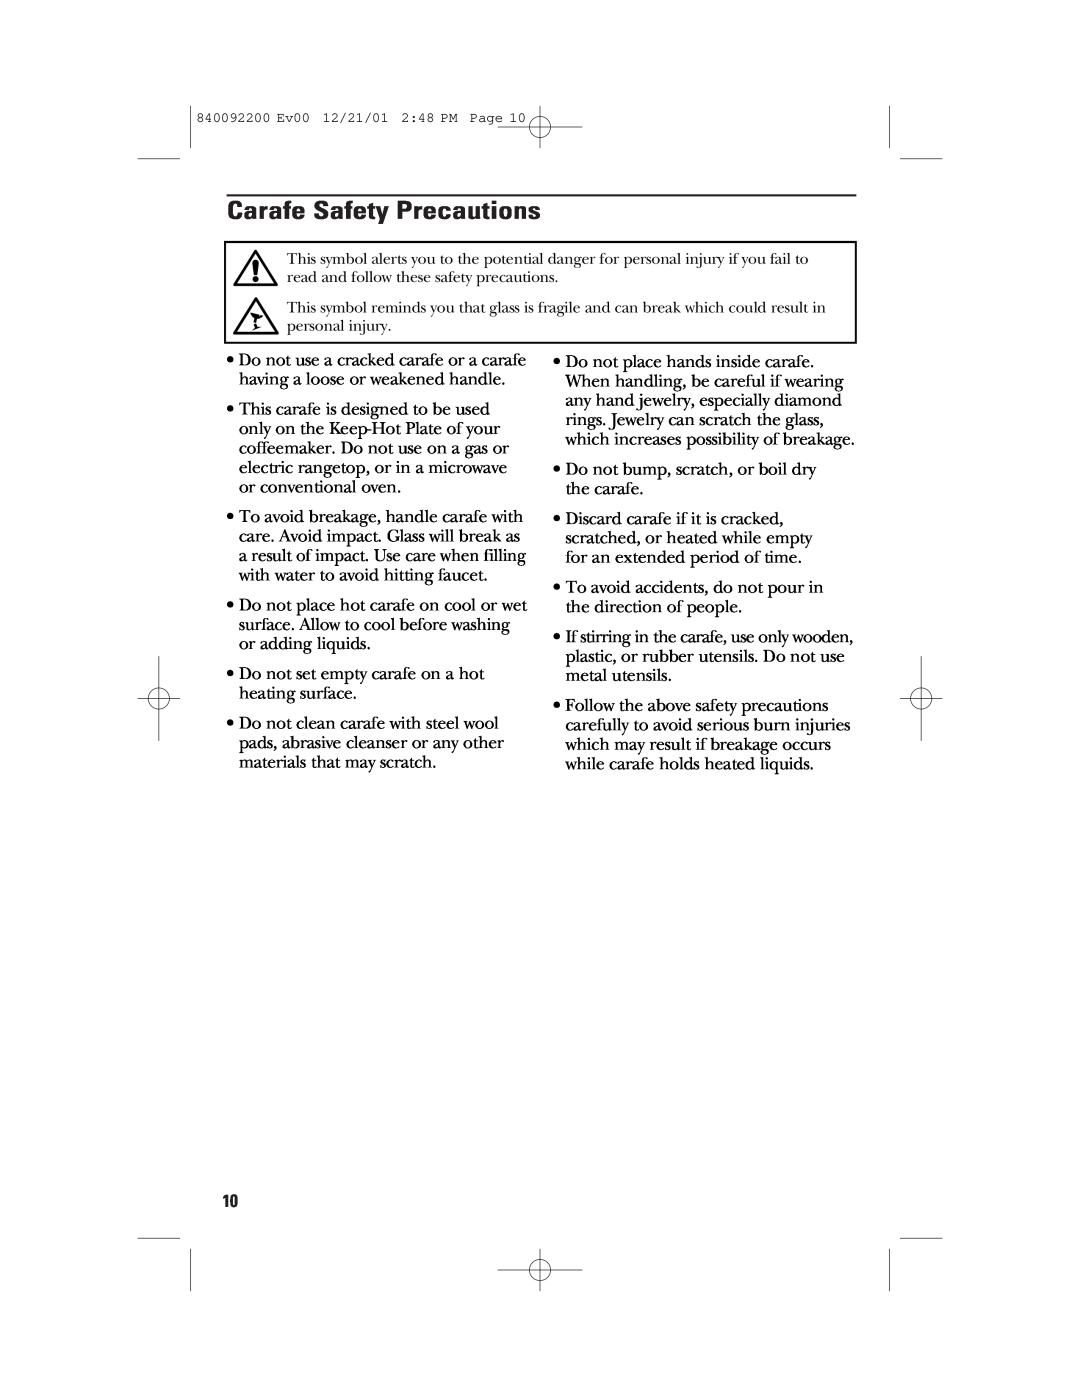 GE 840092200, 106721 manual Carafe Safety Precautions 